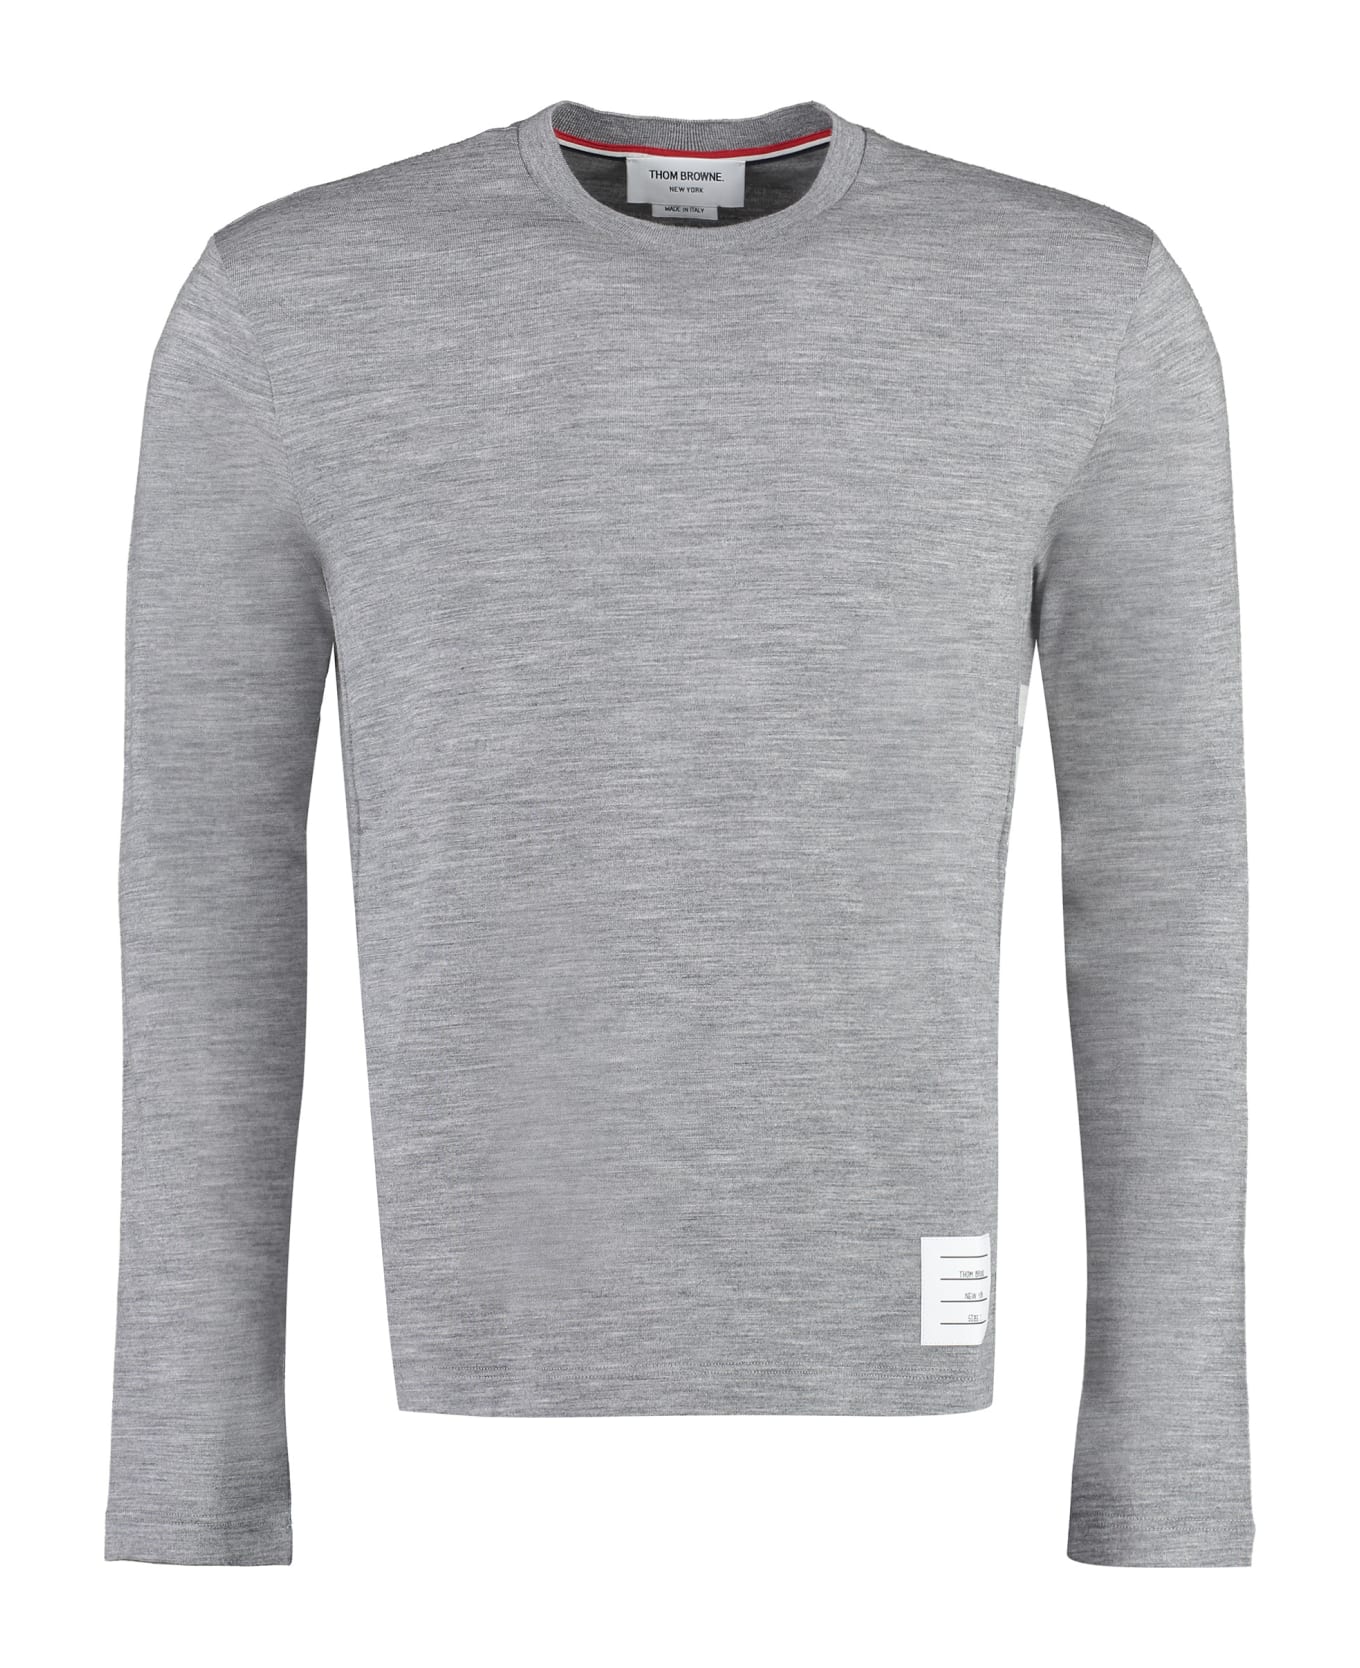 Thom Browne Long Sleeve Wool T-shirt - Light grey